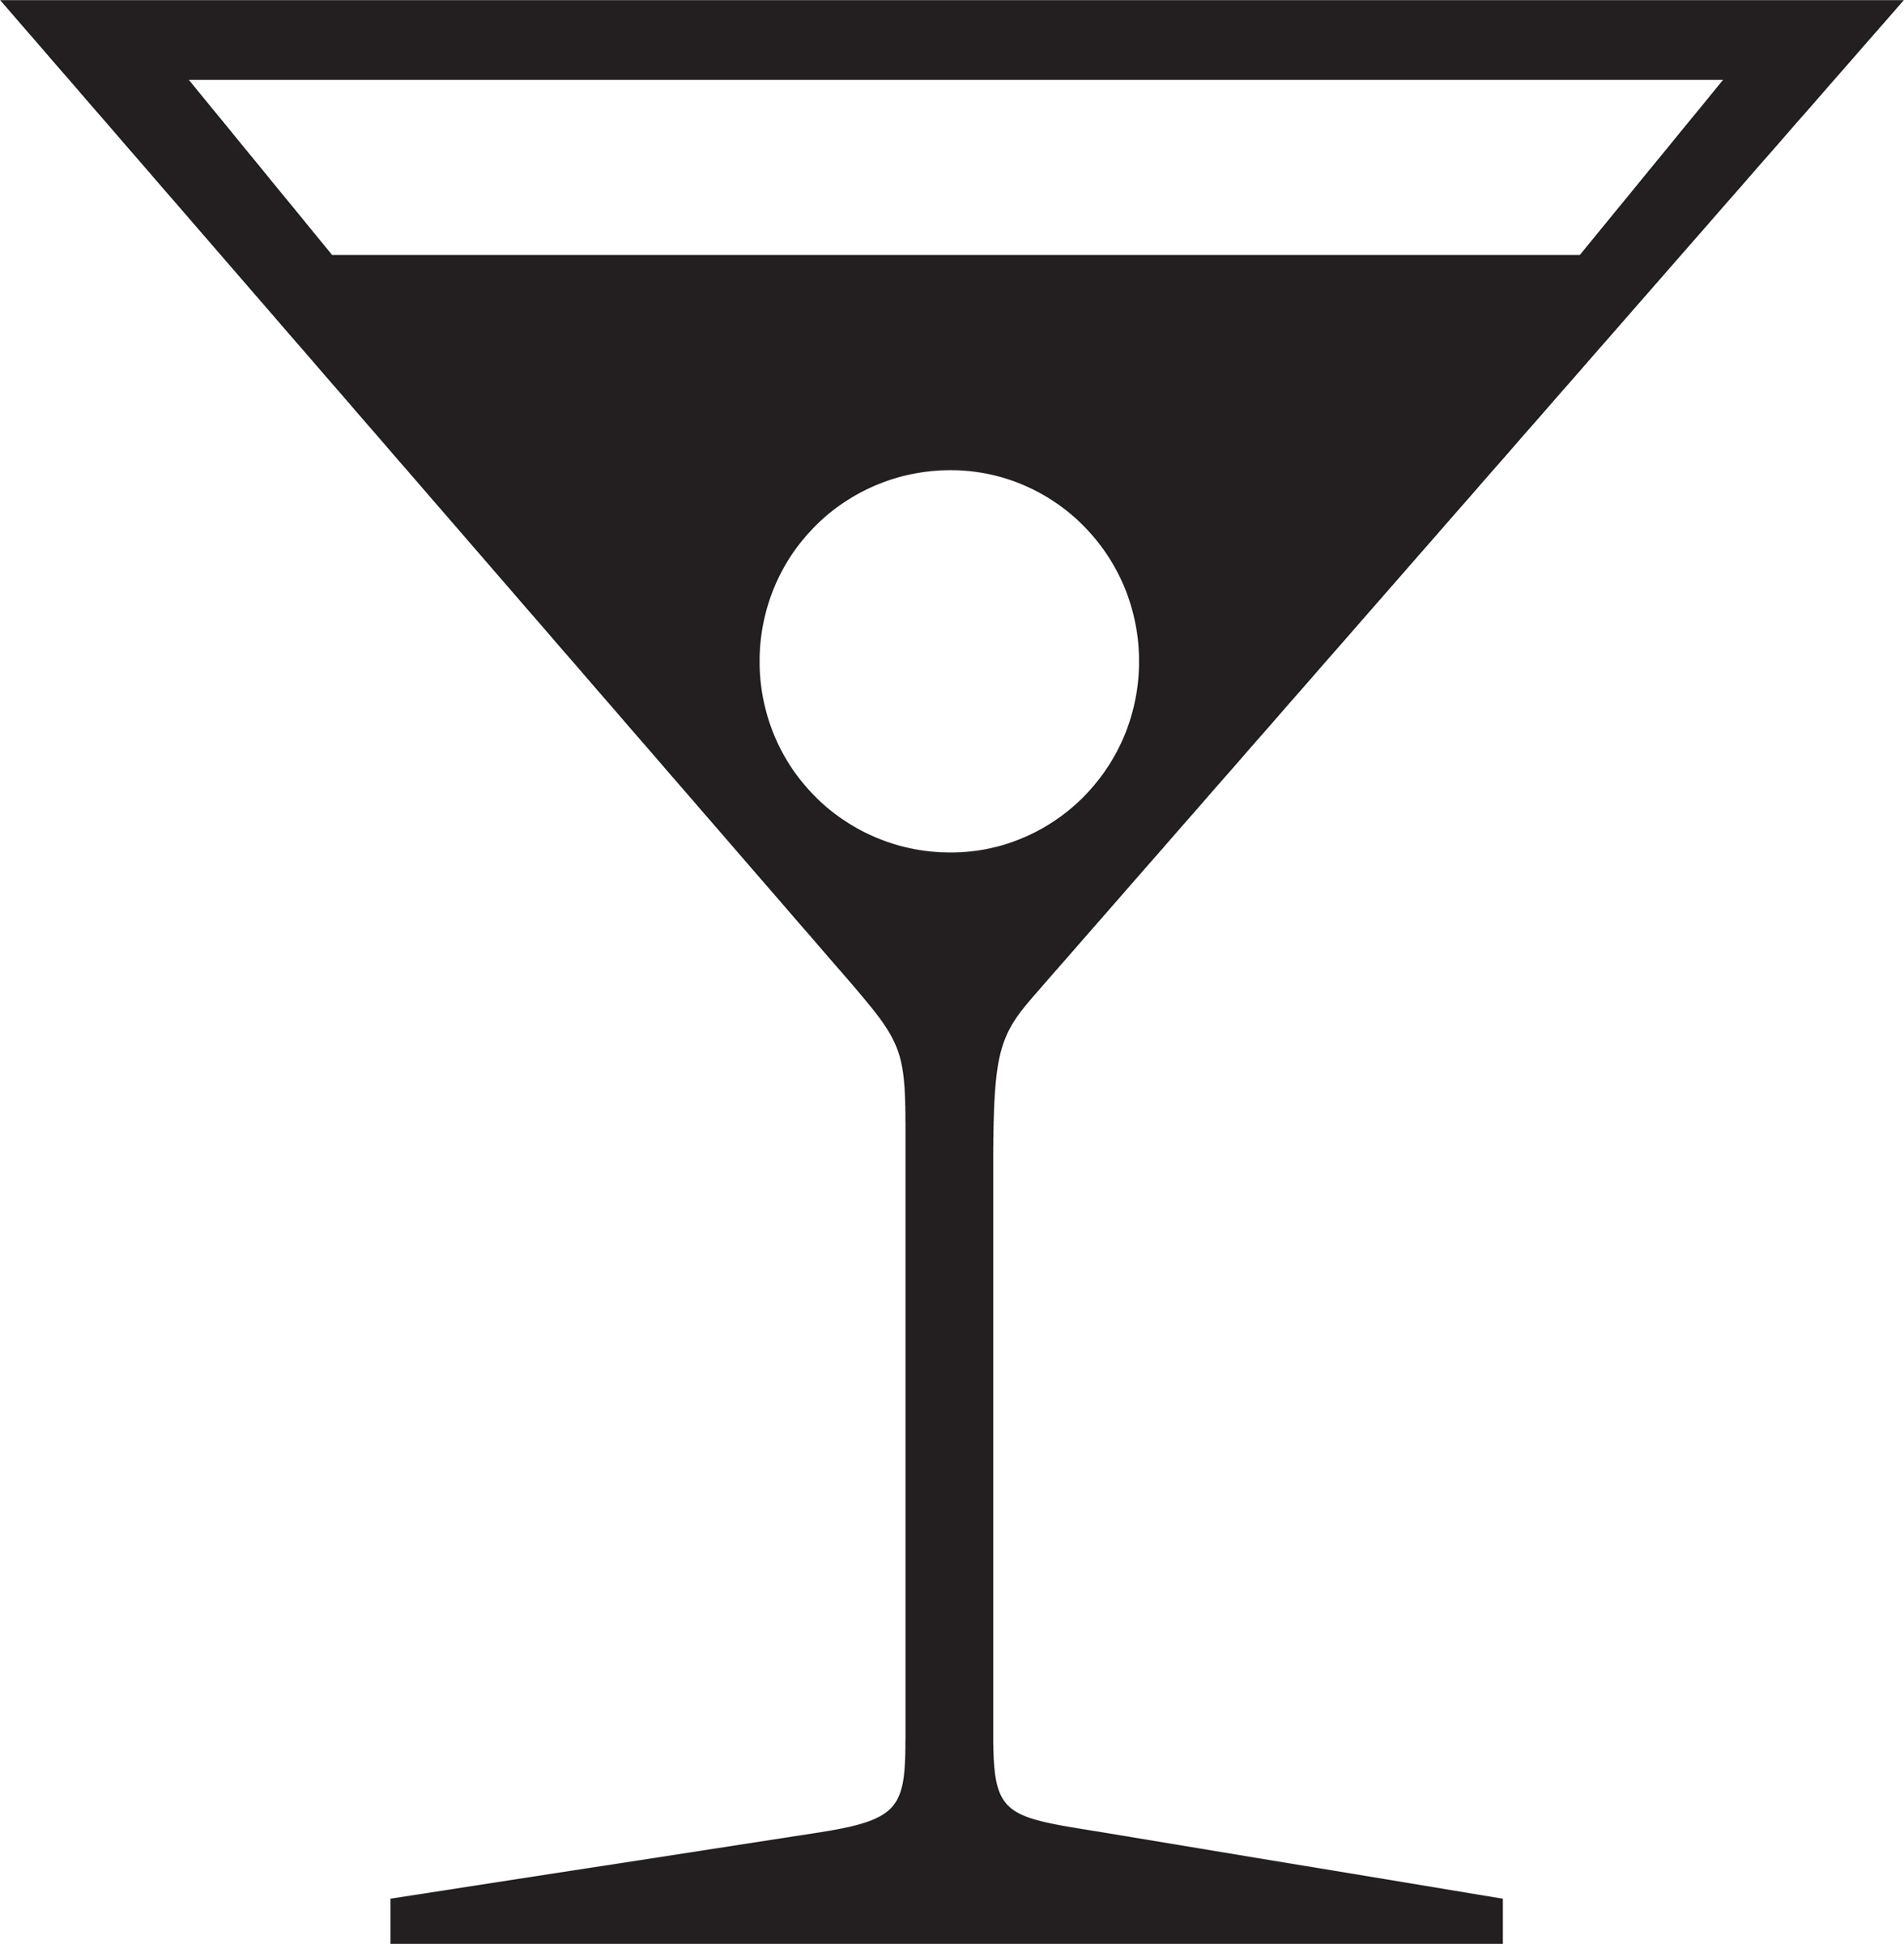 Martini glass cocktail.